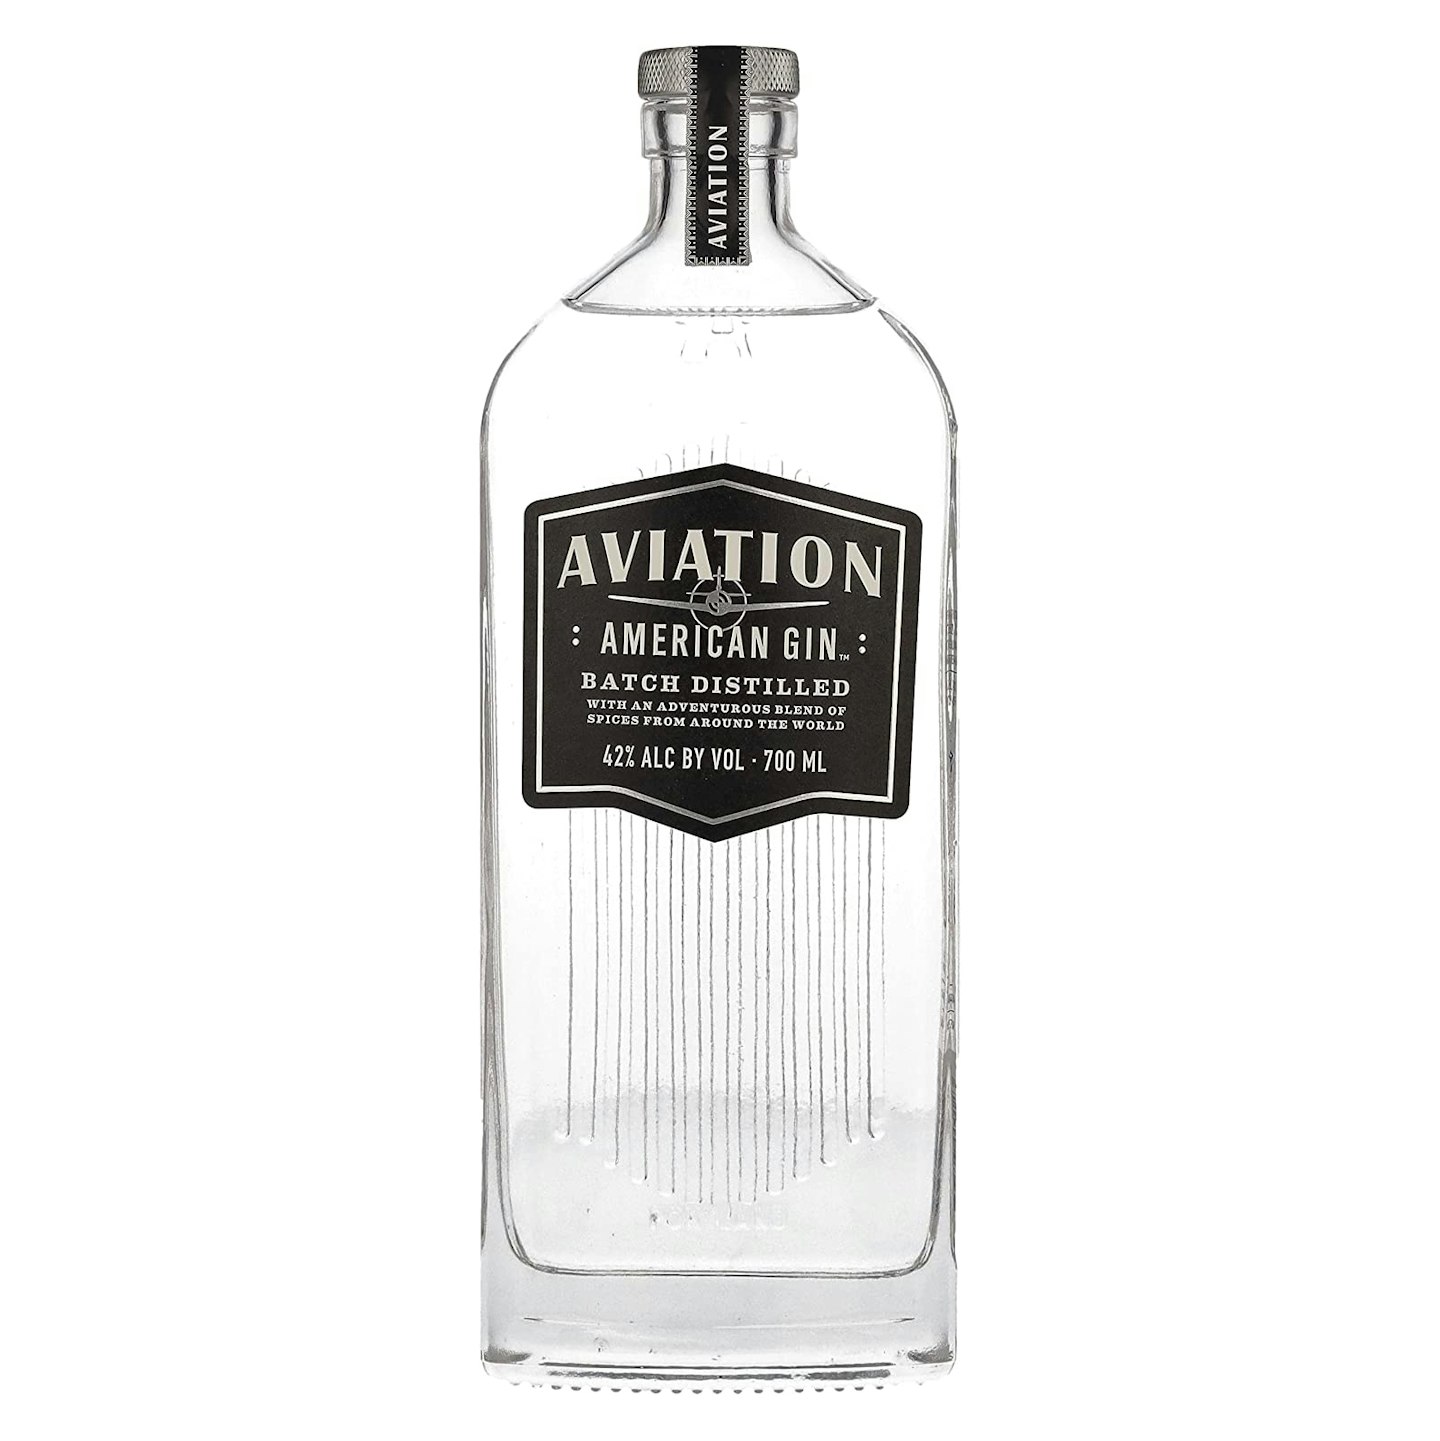  Aviation American Gin